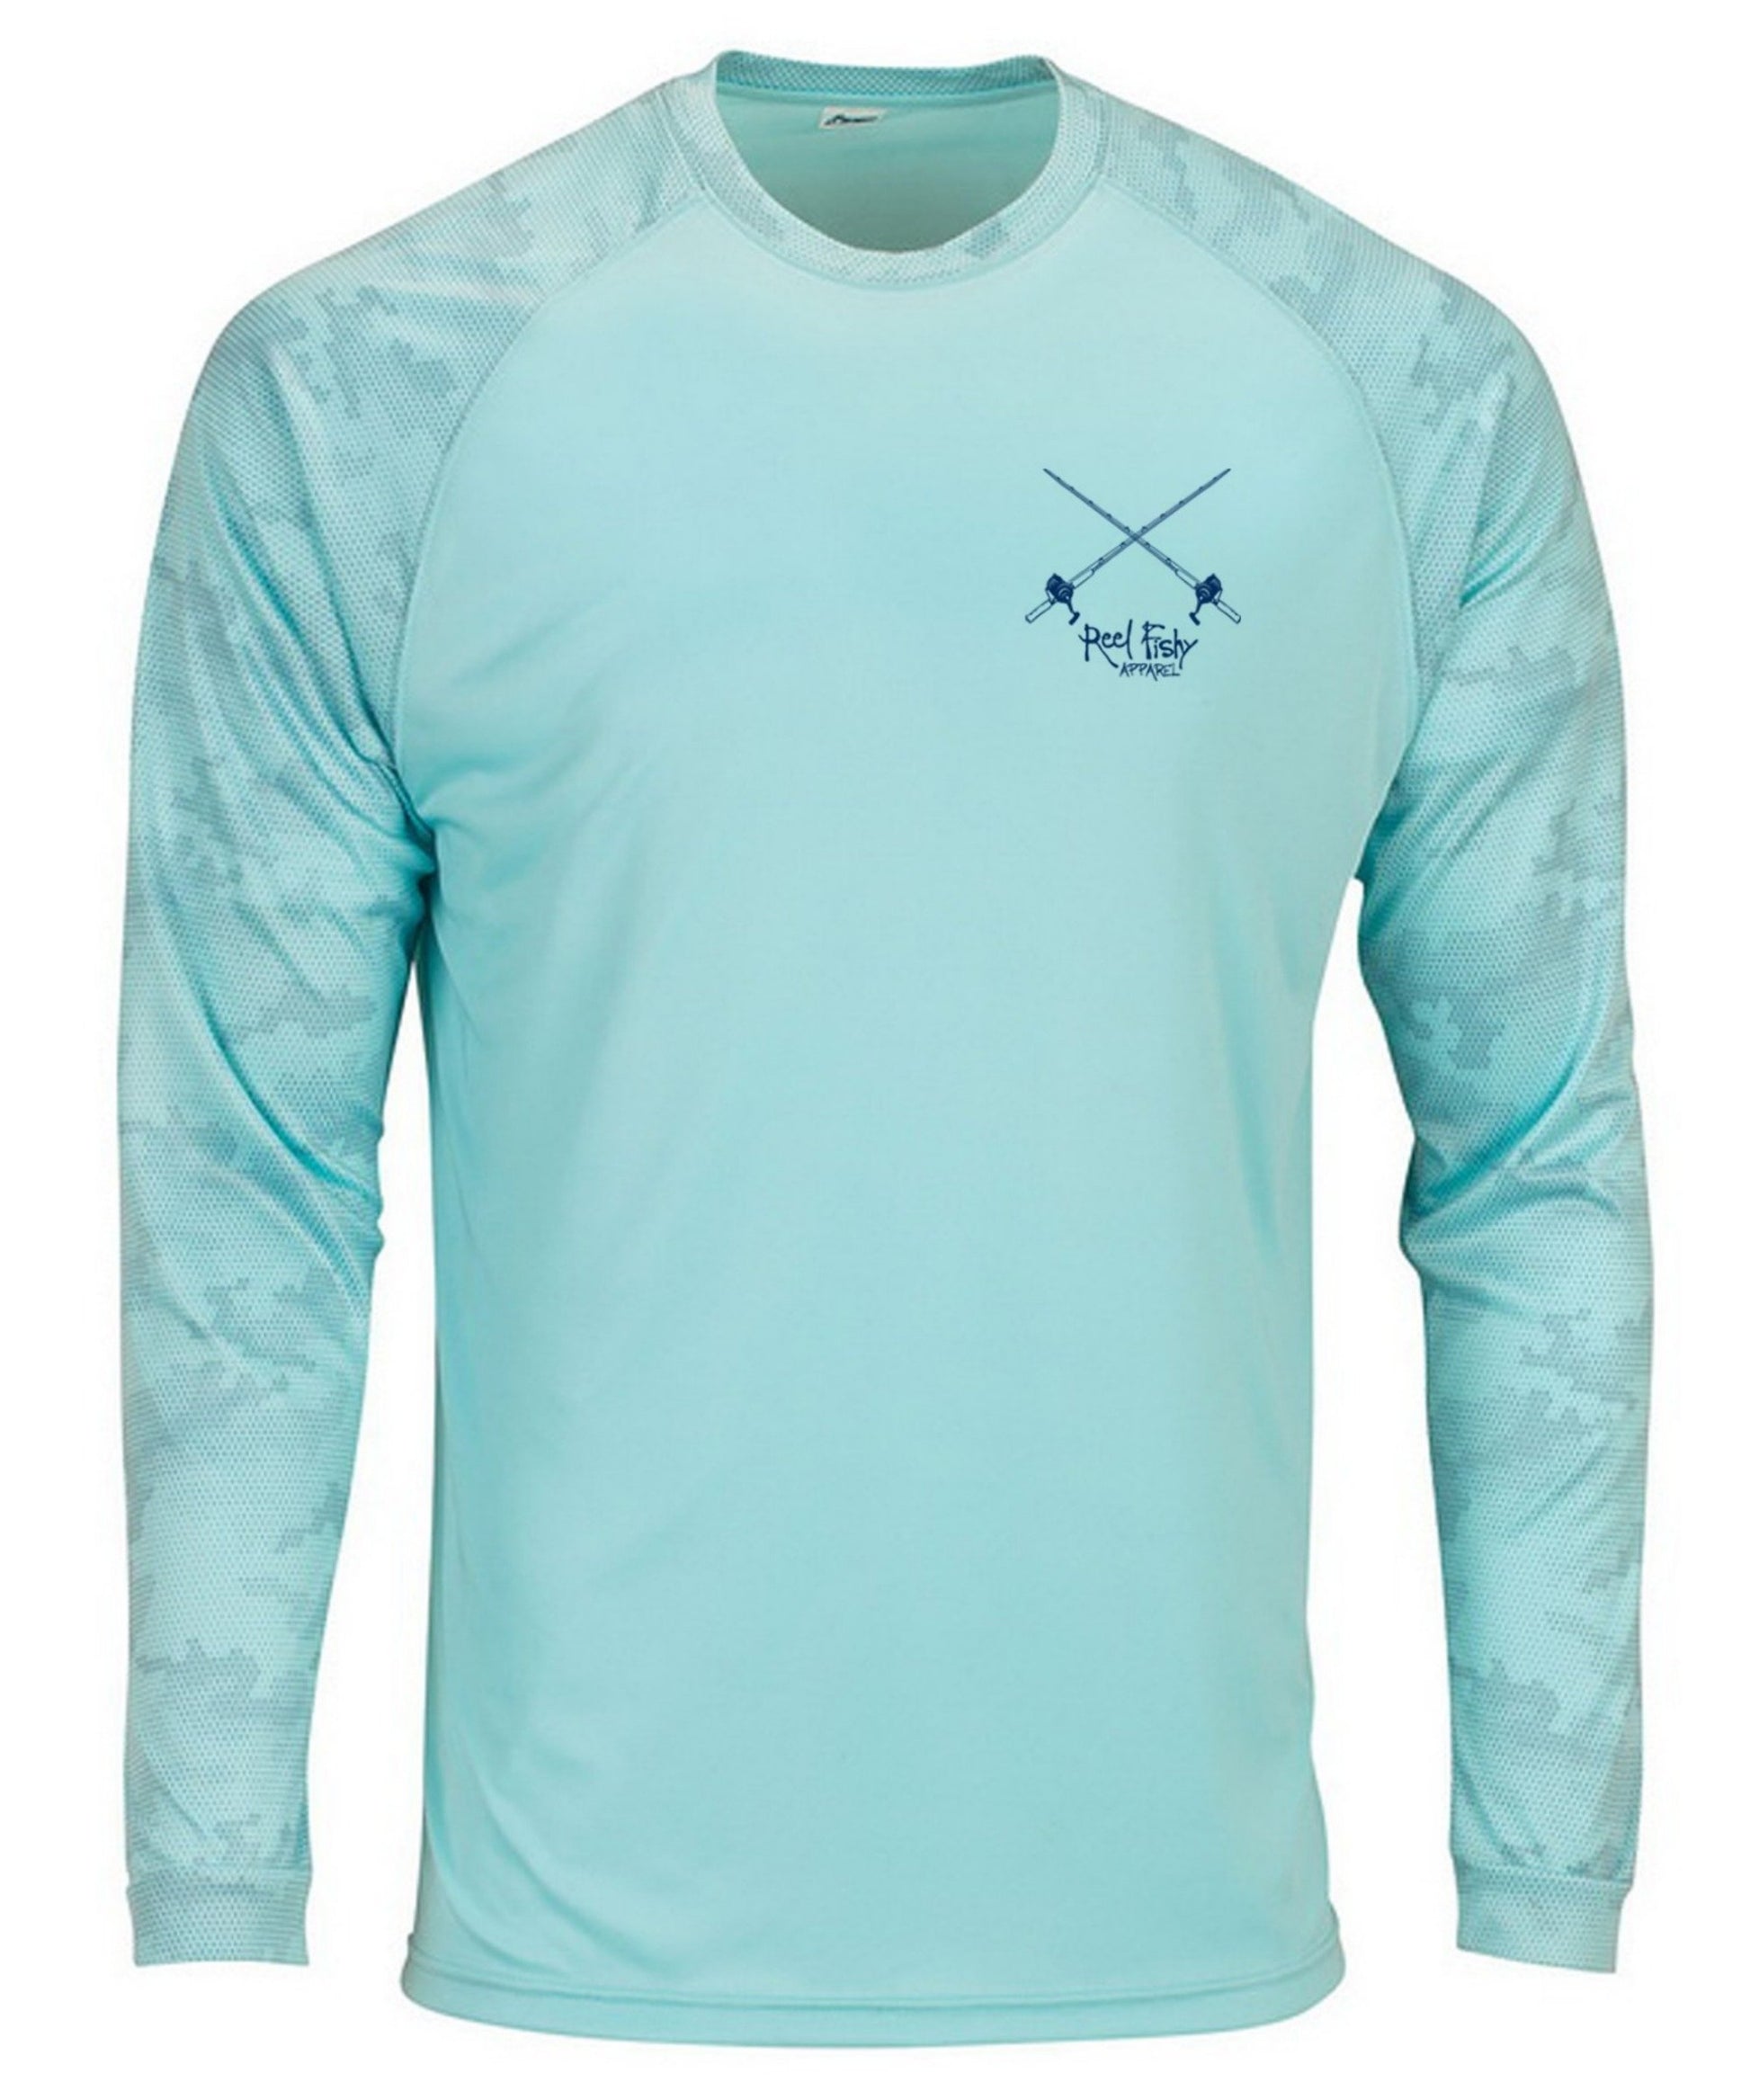 Tarpon Digital Camo Performance Dry-Fit Fishing Long Sleeve Shirts with 50+ UPF Sun Protection - Aqua Blue - Reel Fishy Salt Rods on Front